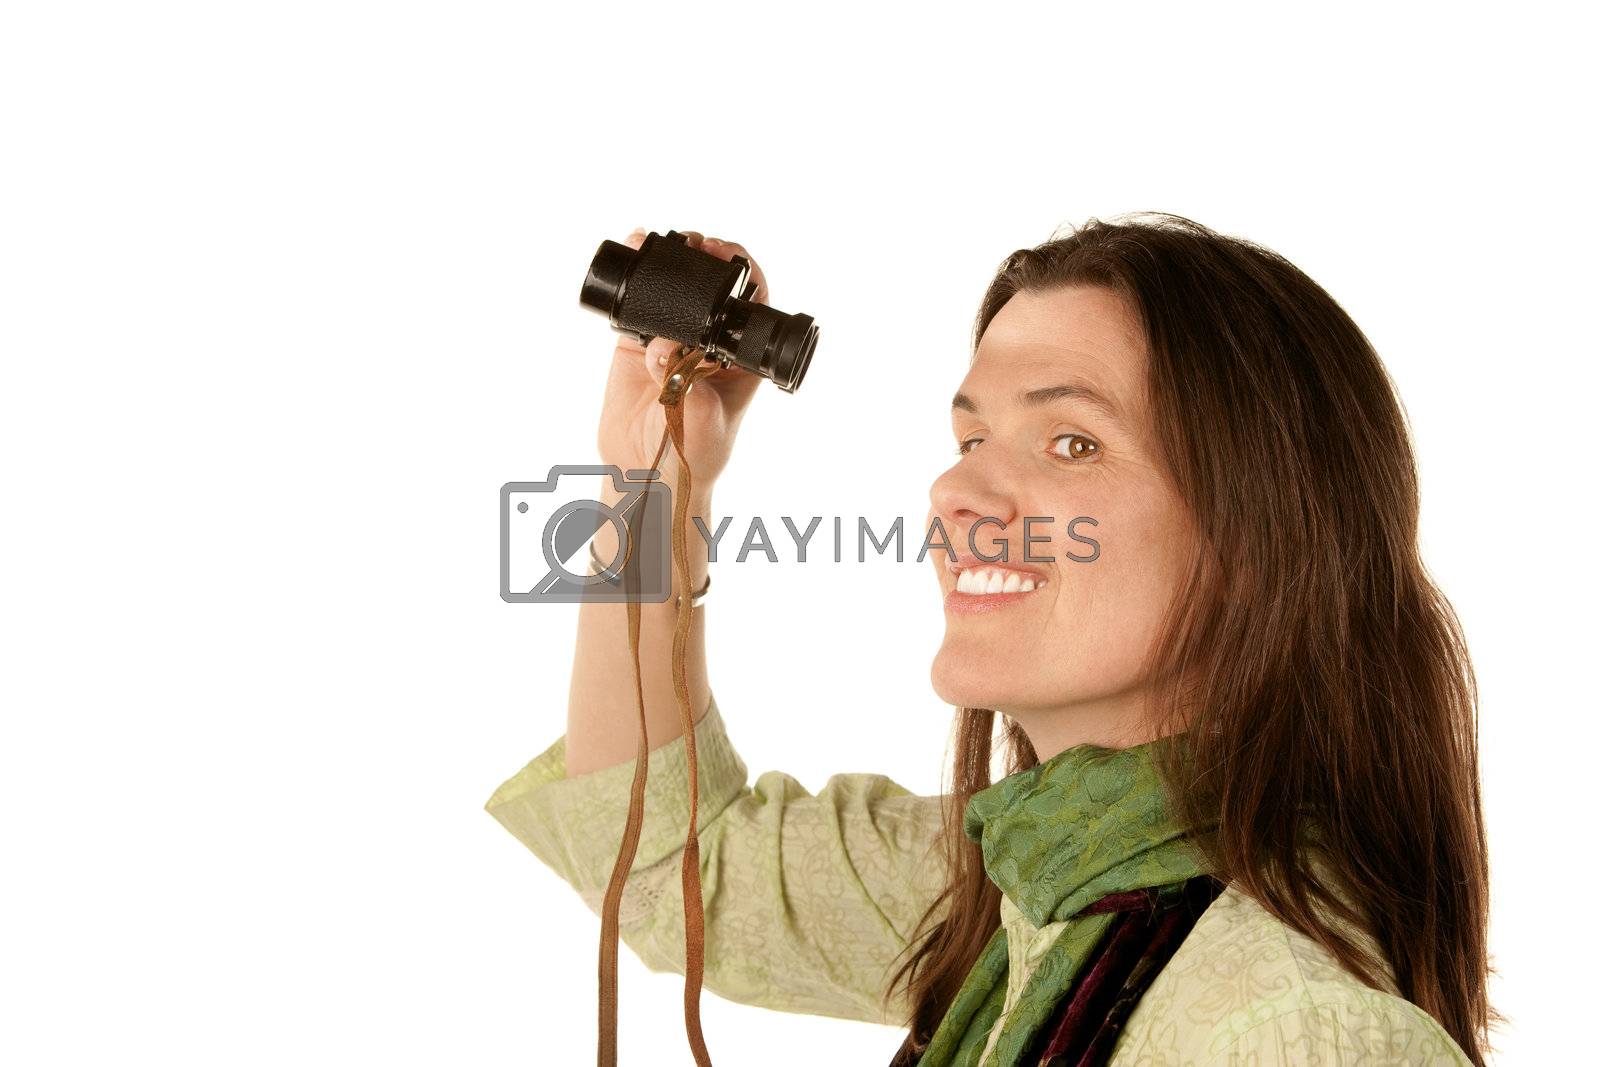 Royalty free image of Woman using binoculars by Creatista